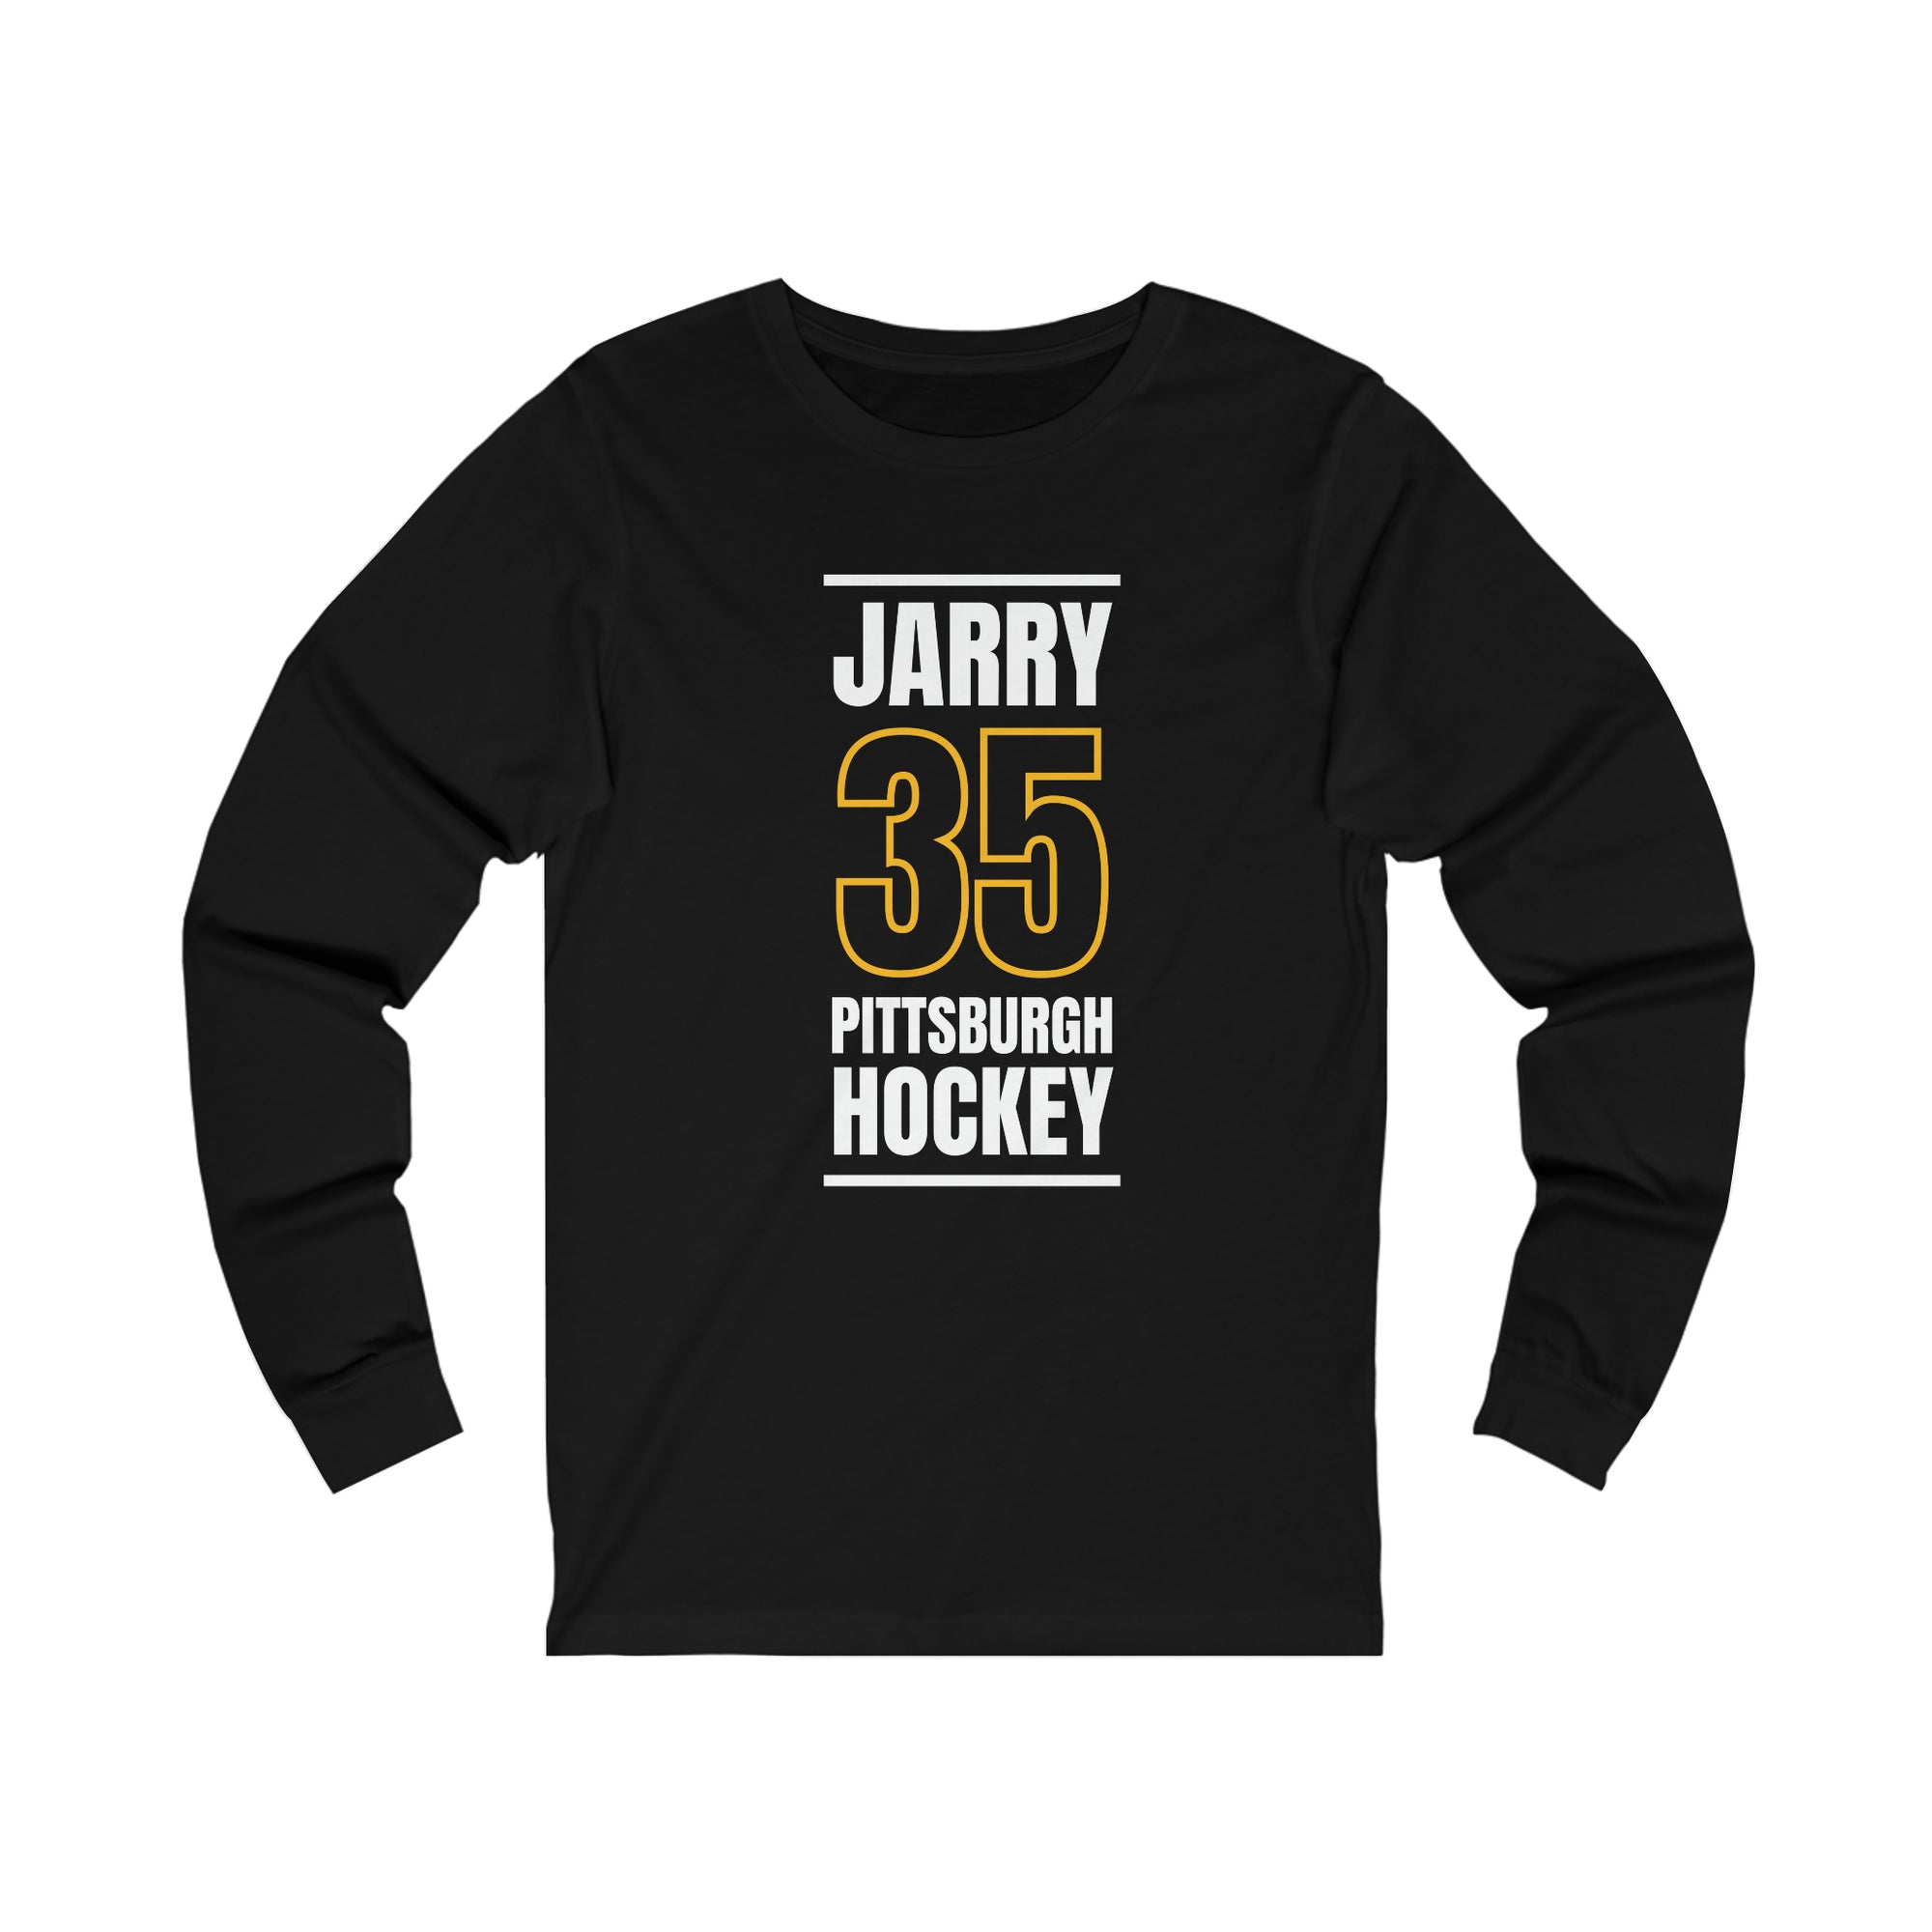 Jarry 35 Pittsburgh Hockey Black Vertical Design Unisex Jersey Long Sleeve Shirt